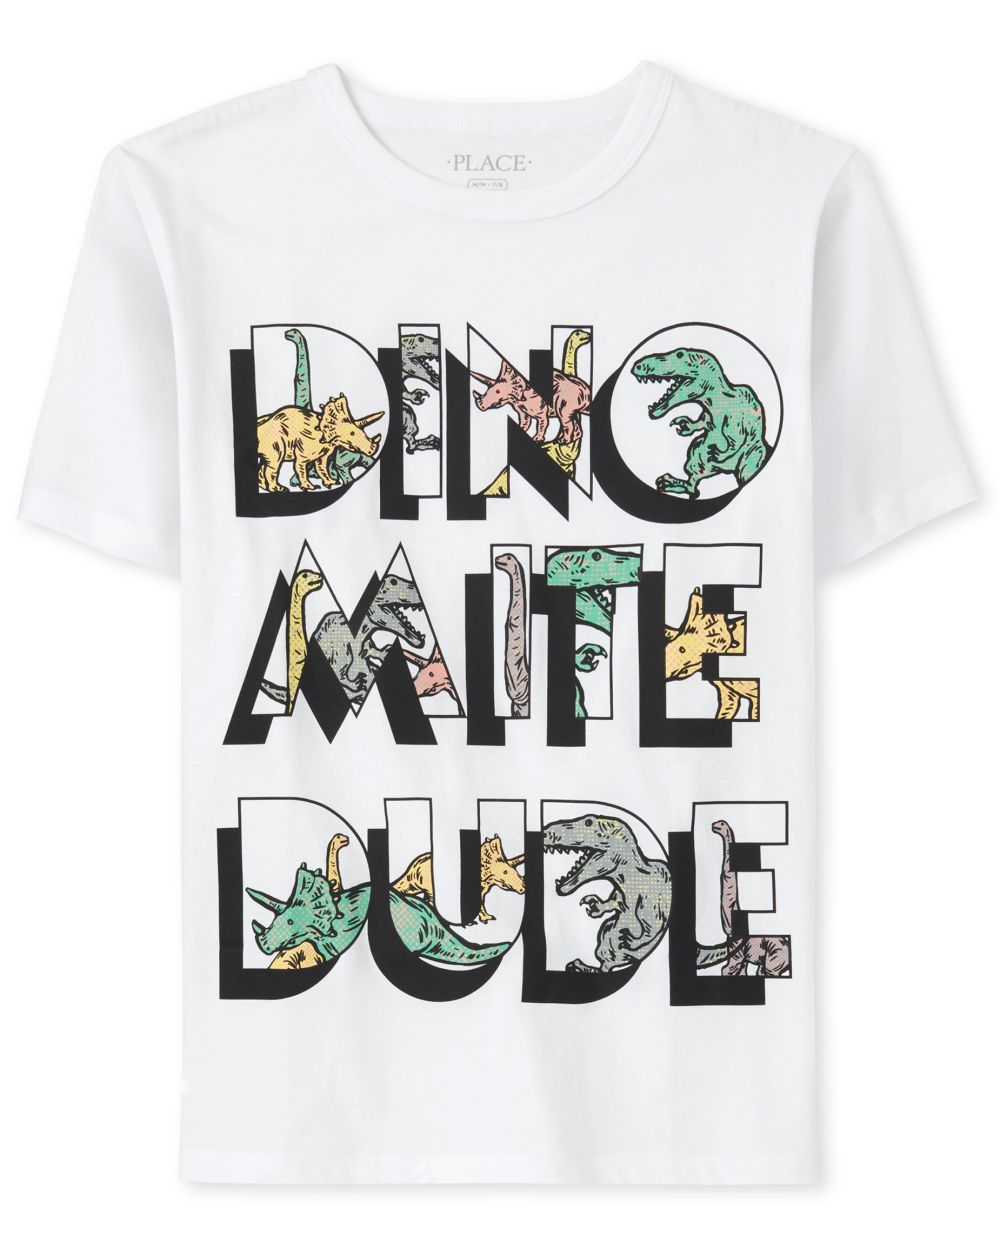 Boys Short Sleeve 'Dino Mite Dude' Matching Graphic Tee